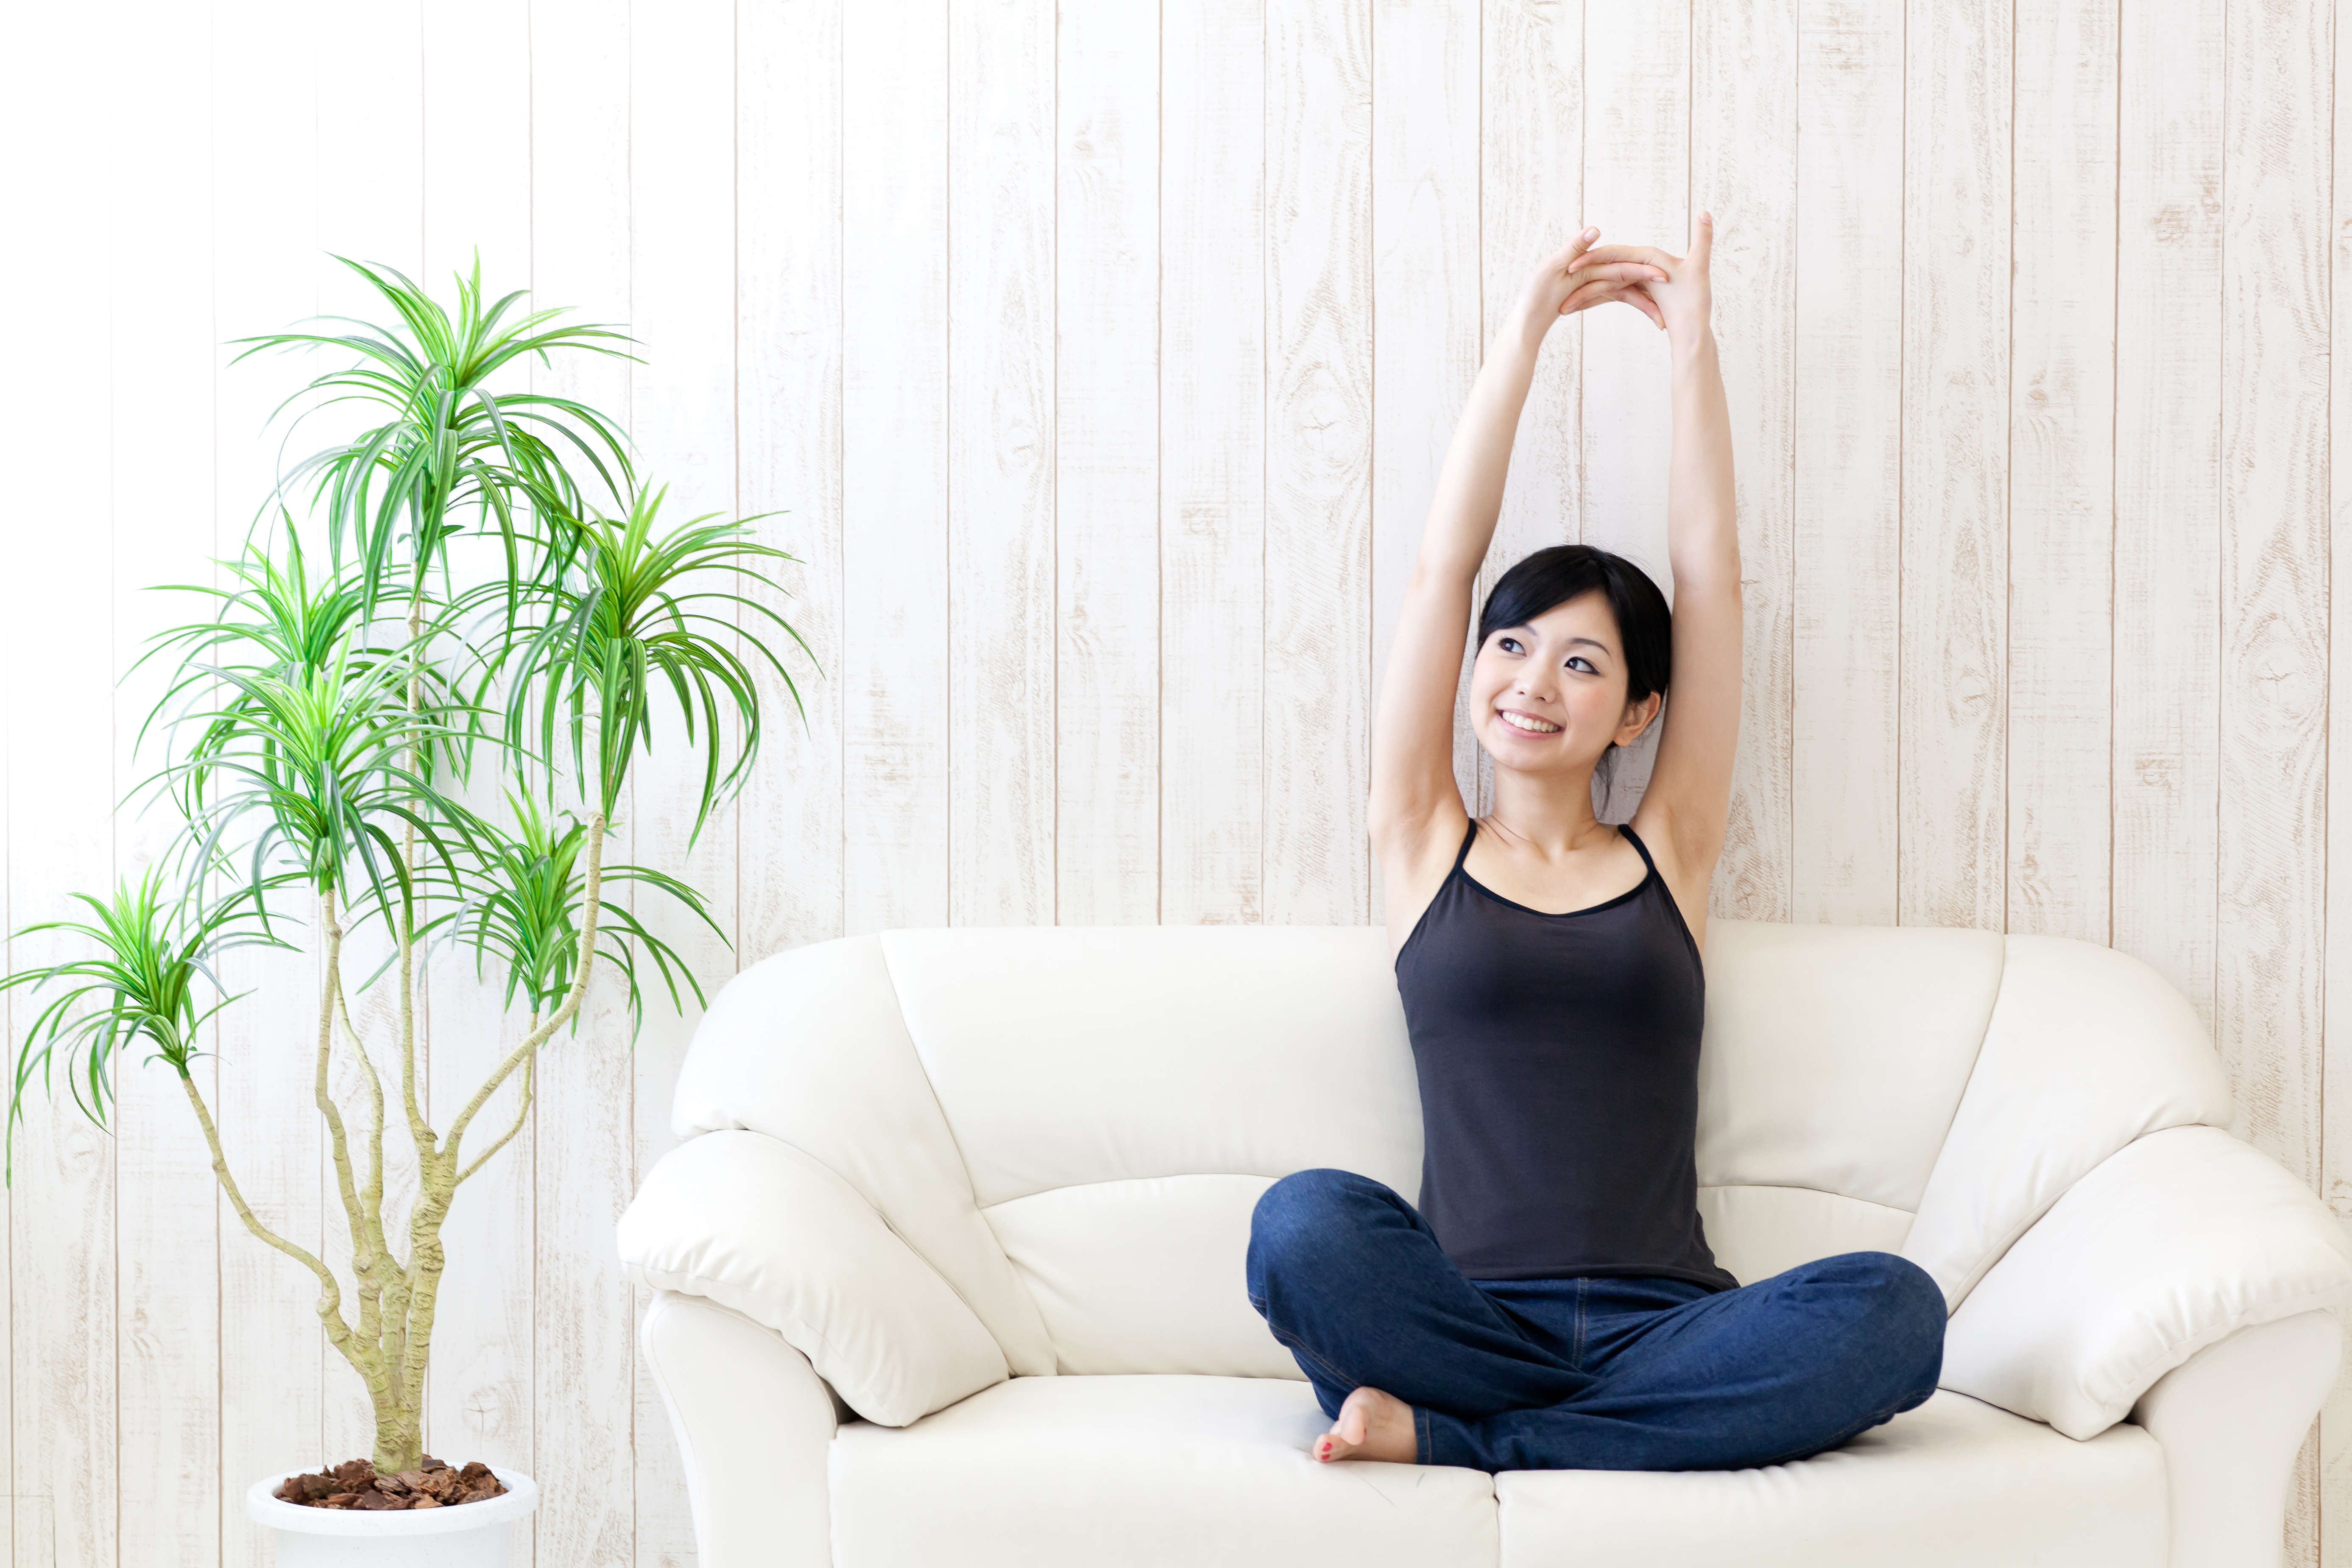 Лоскутова релакс. Asian Relax. Stretching is Relaxing как её зовут. Asian stretching. 1024 567 Asian Relax.